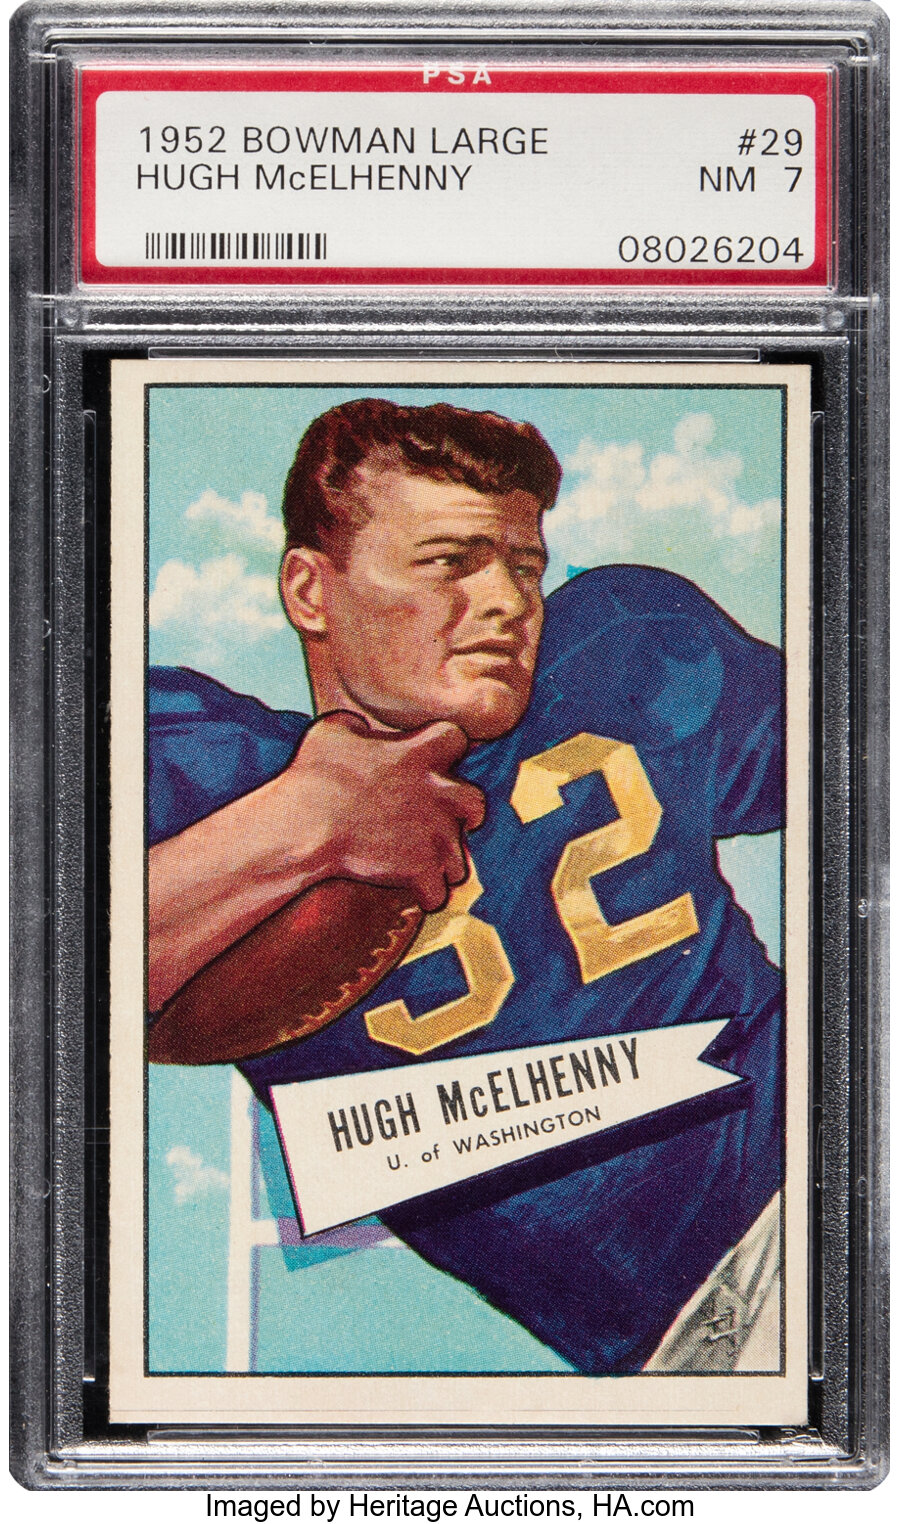 1952 Bowman Large Hugh McElhenny Rookie #29 PSA NM 7